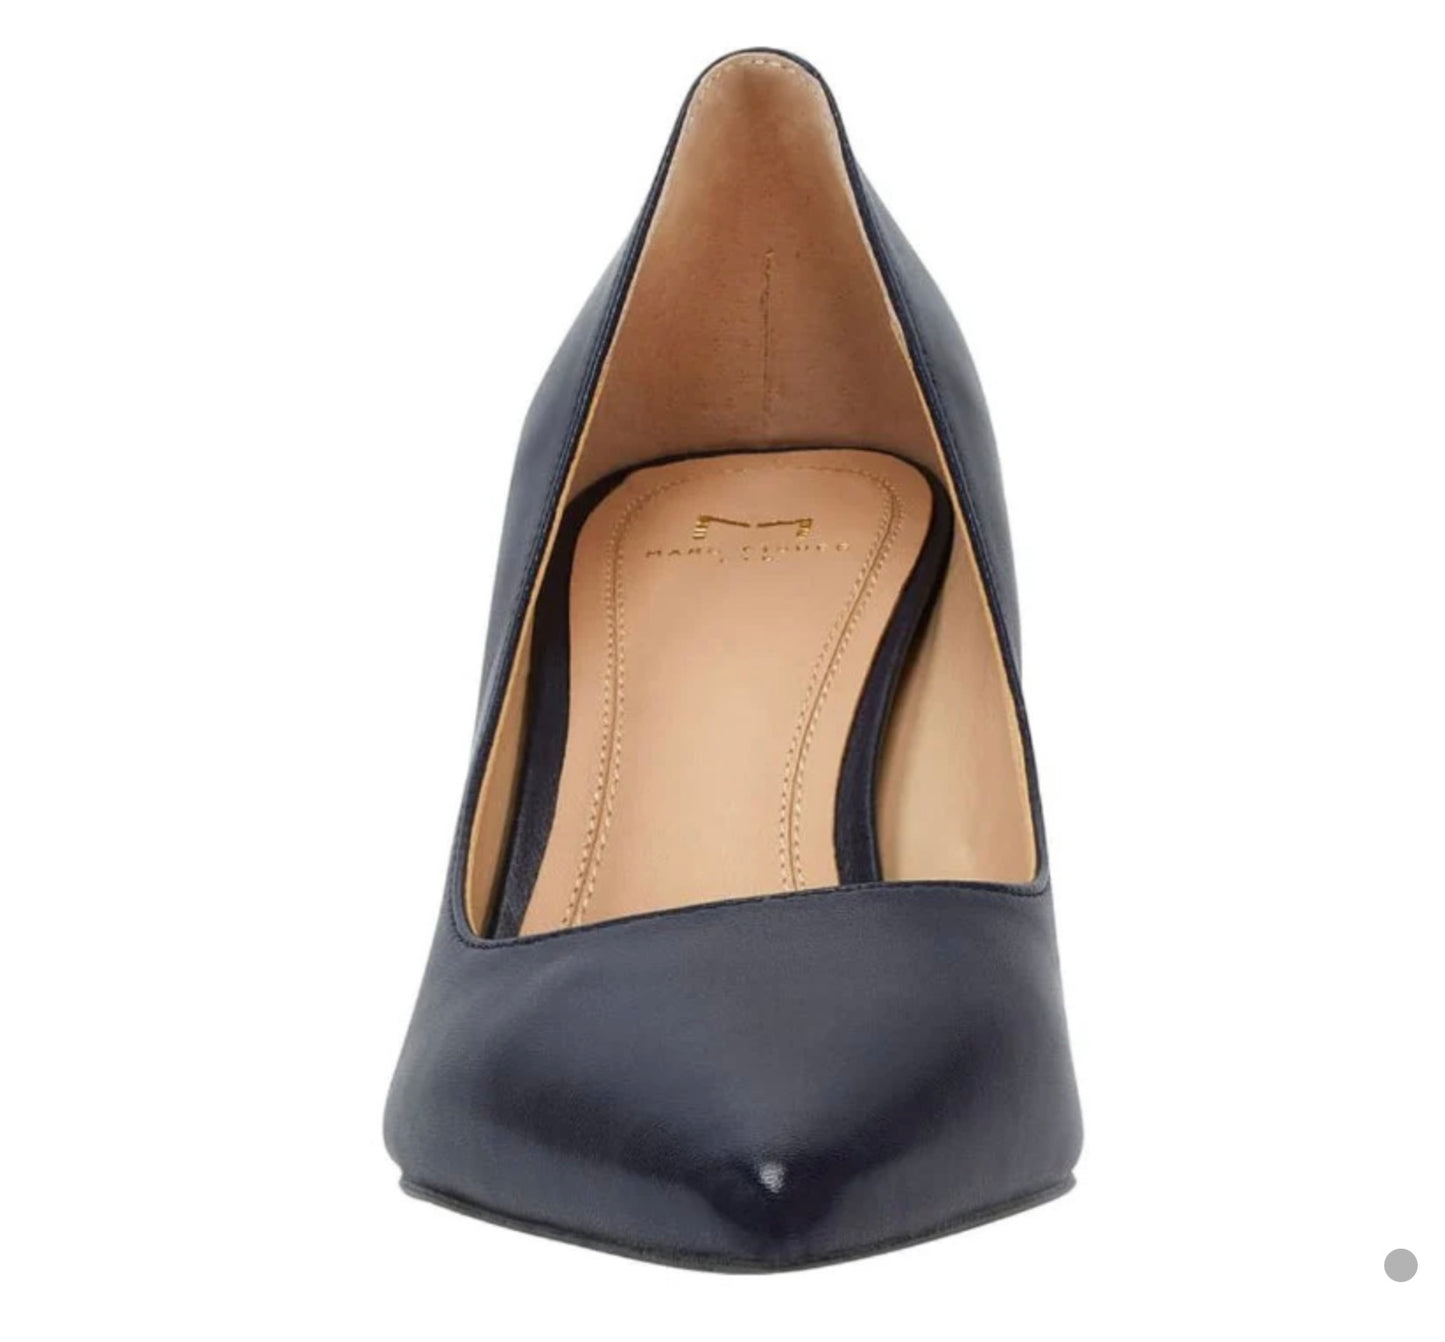 Zara dark blue heel